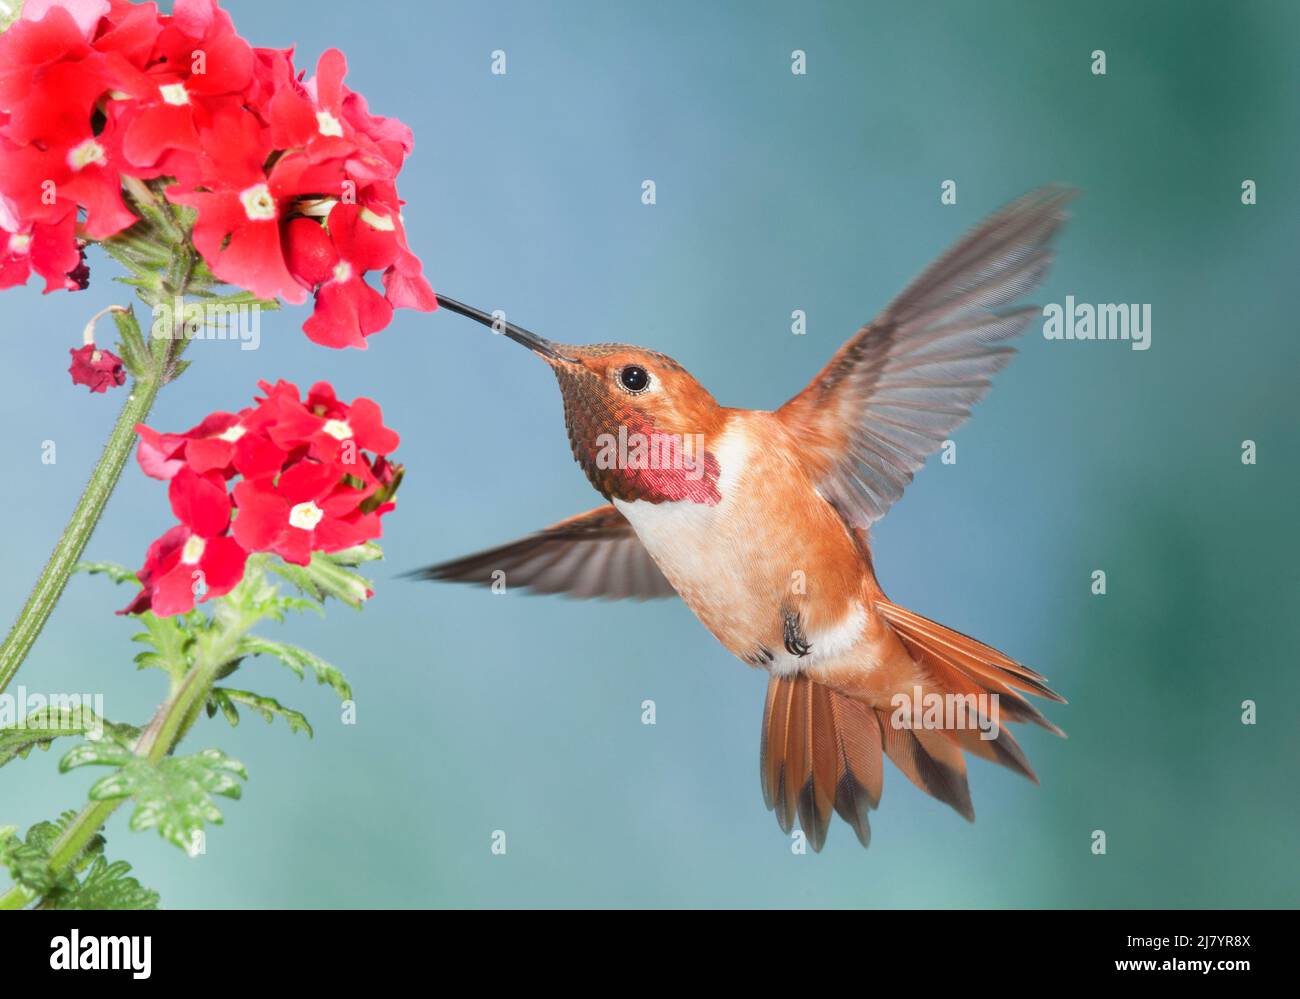 North America; Alaska; Southeast; Wildlife; Birds; Hummingbird; Rufous Hummingbird; Selasphorus rufous; Male; Nectar feeding; Spring. Stock Photo